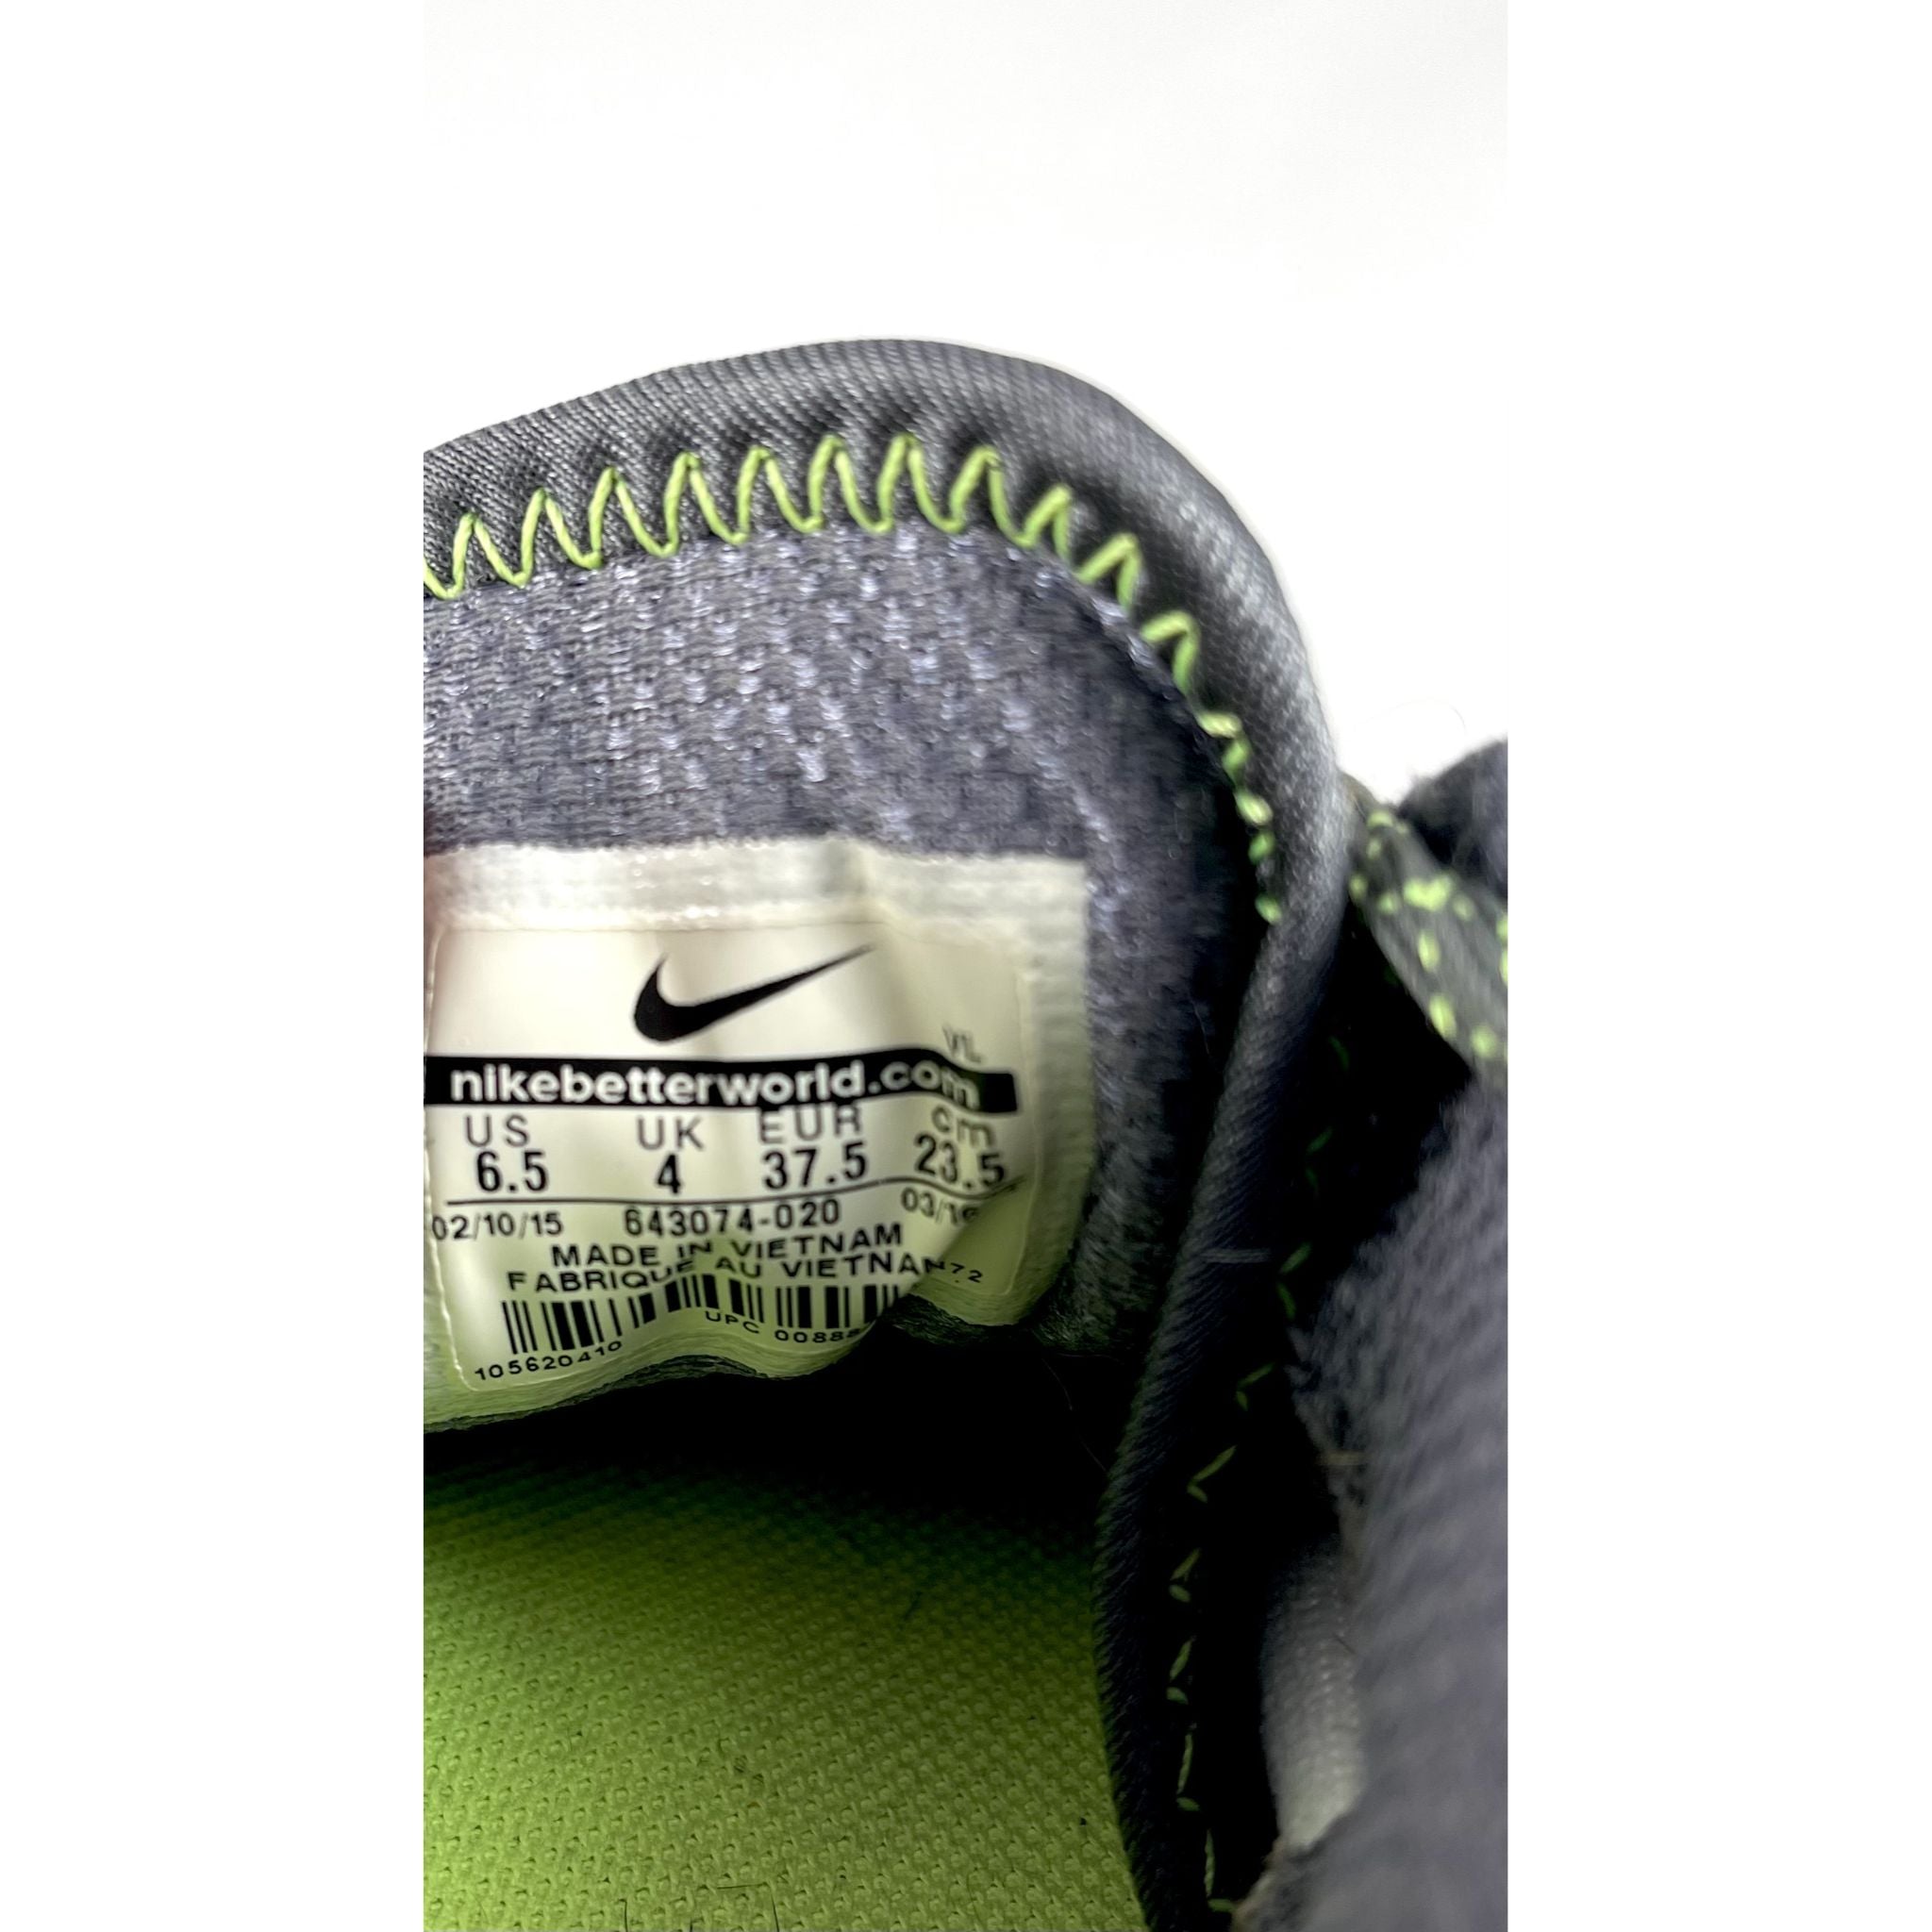 Nike Gray Joggers